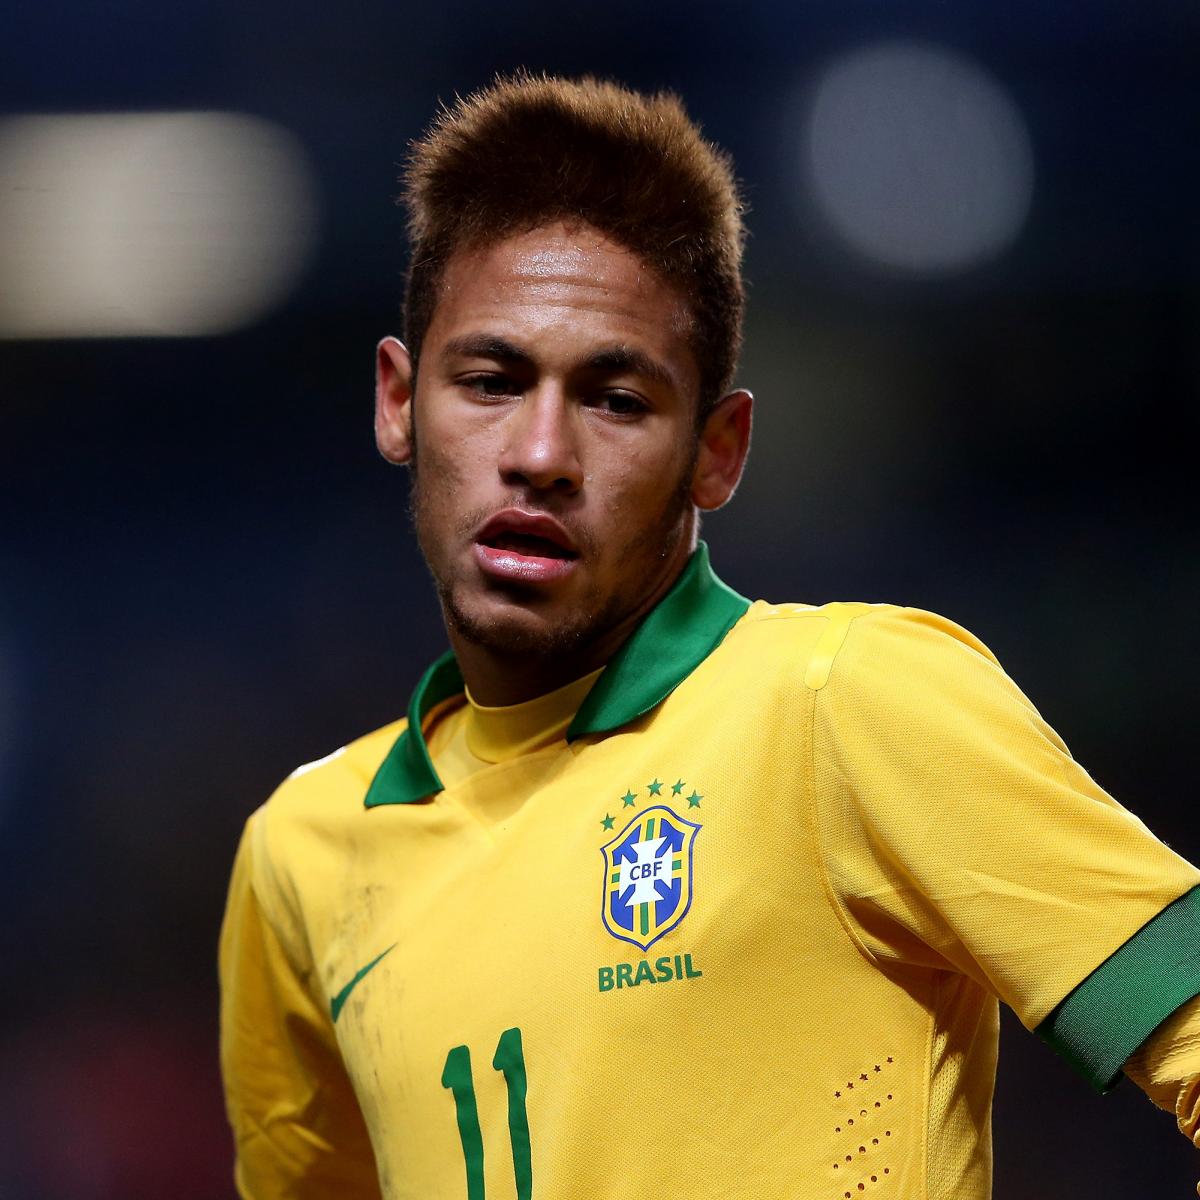 Neymar Transfer Rumours: Latest News on the Santos Star | Bleacher Report | Latest ...